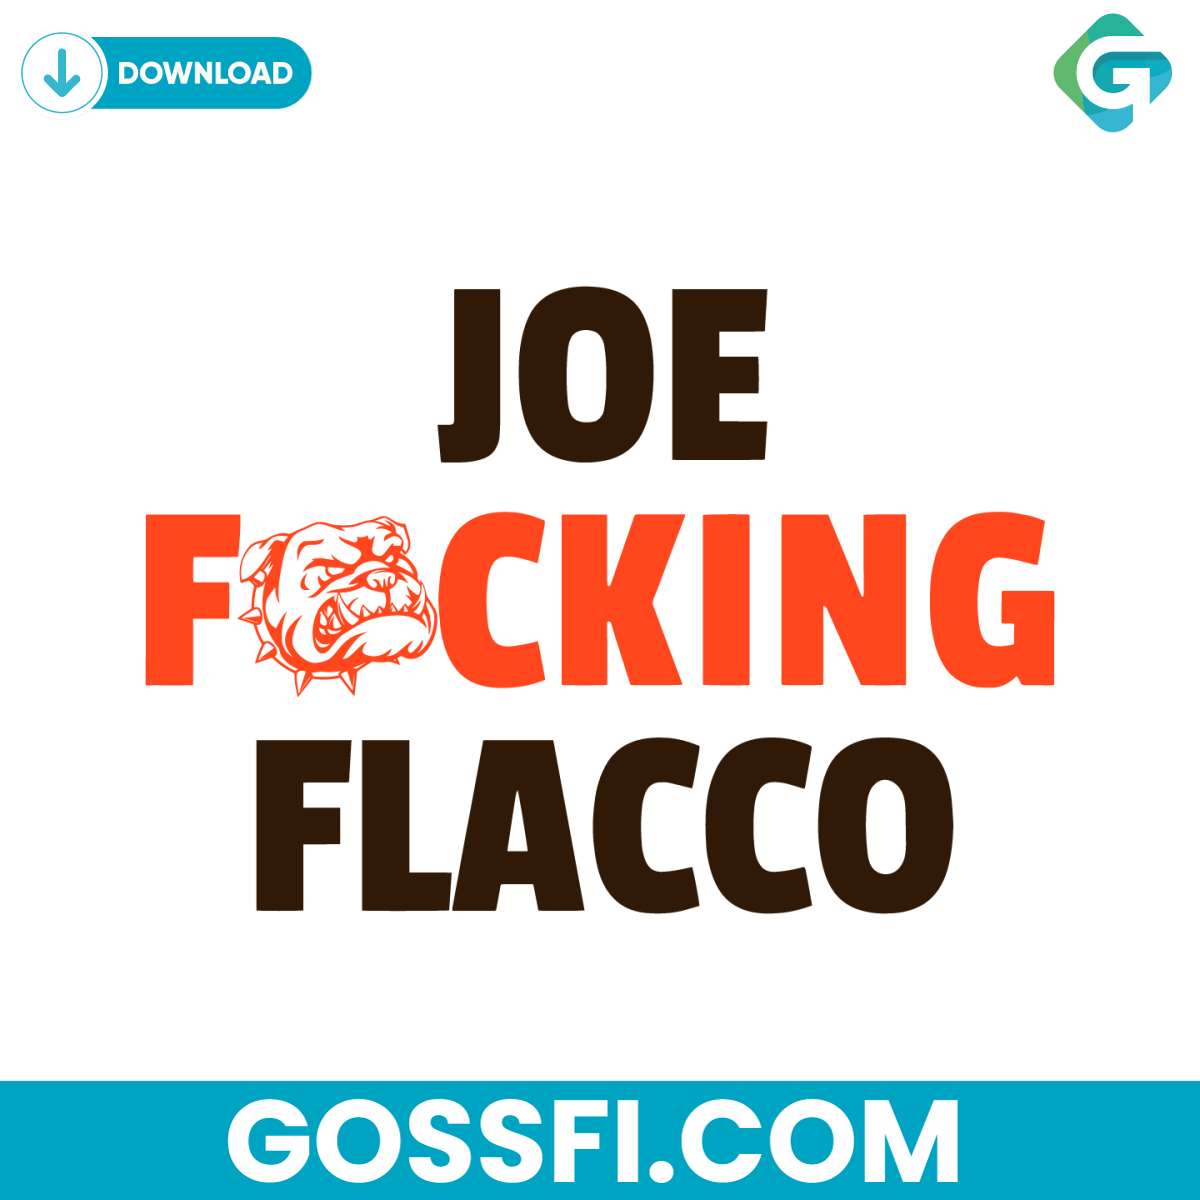 joe-facking-flacco-cleveland-browns-svg-digital-download